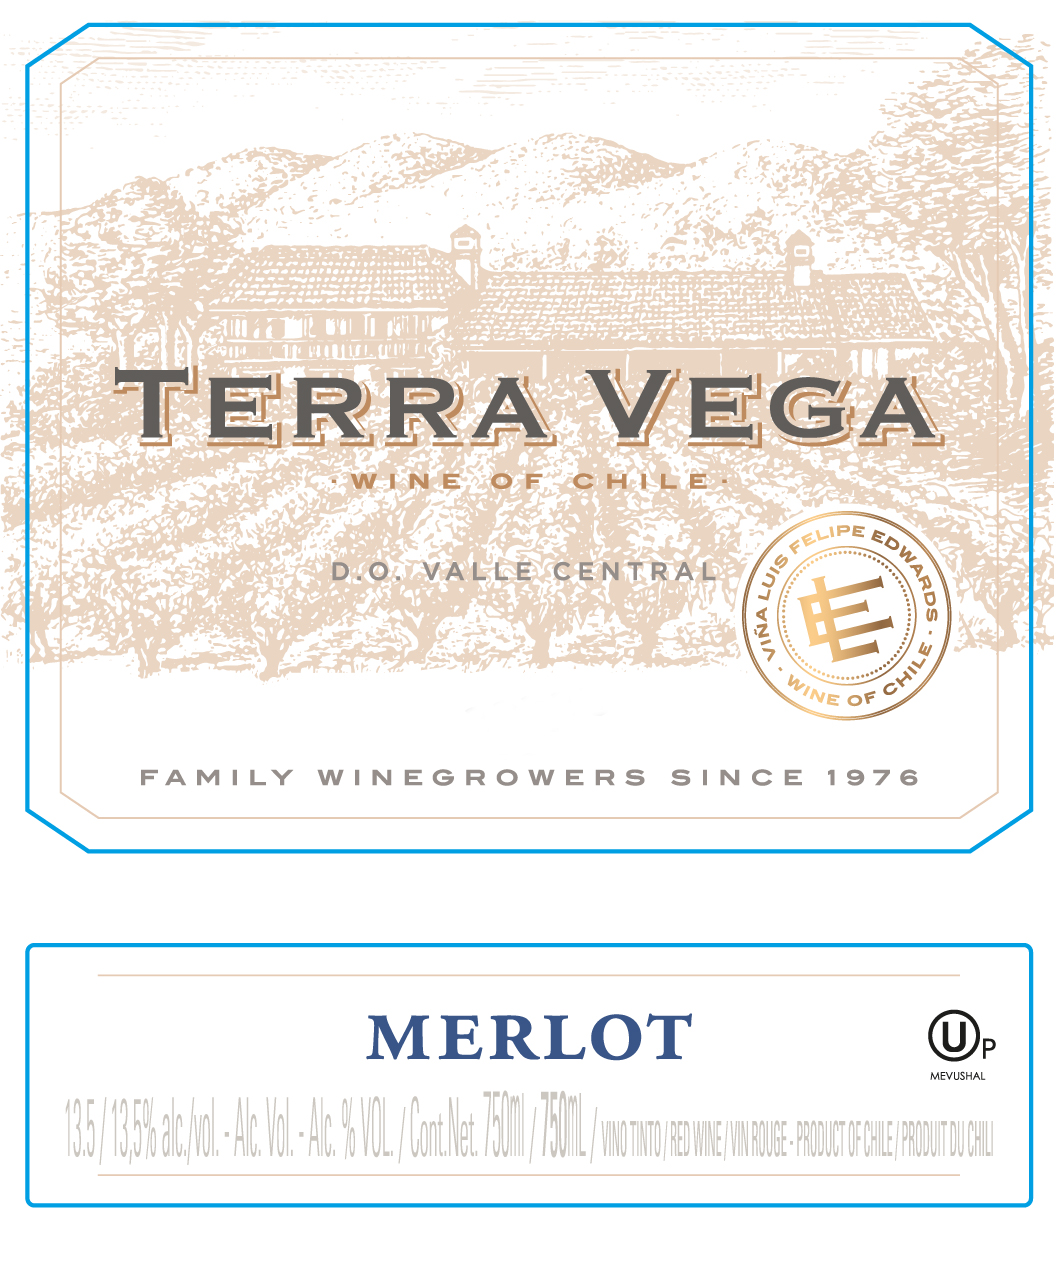 Terra Vega - Merlot label